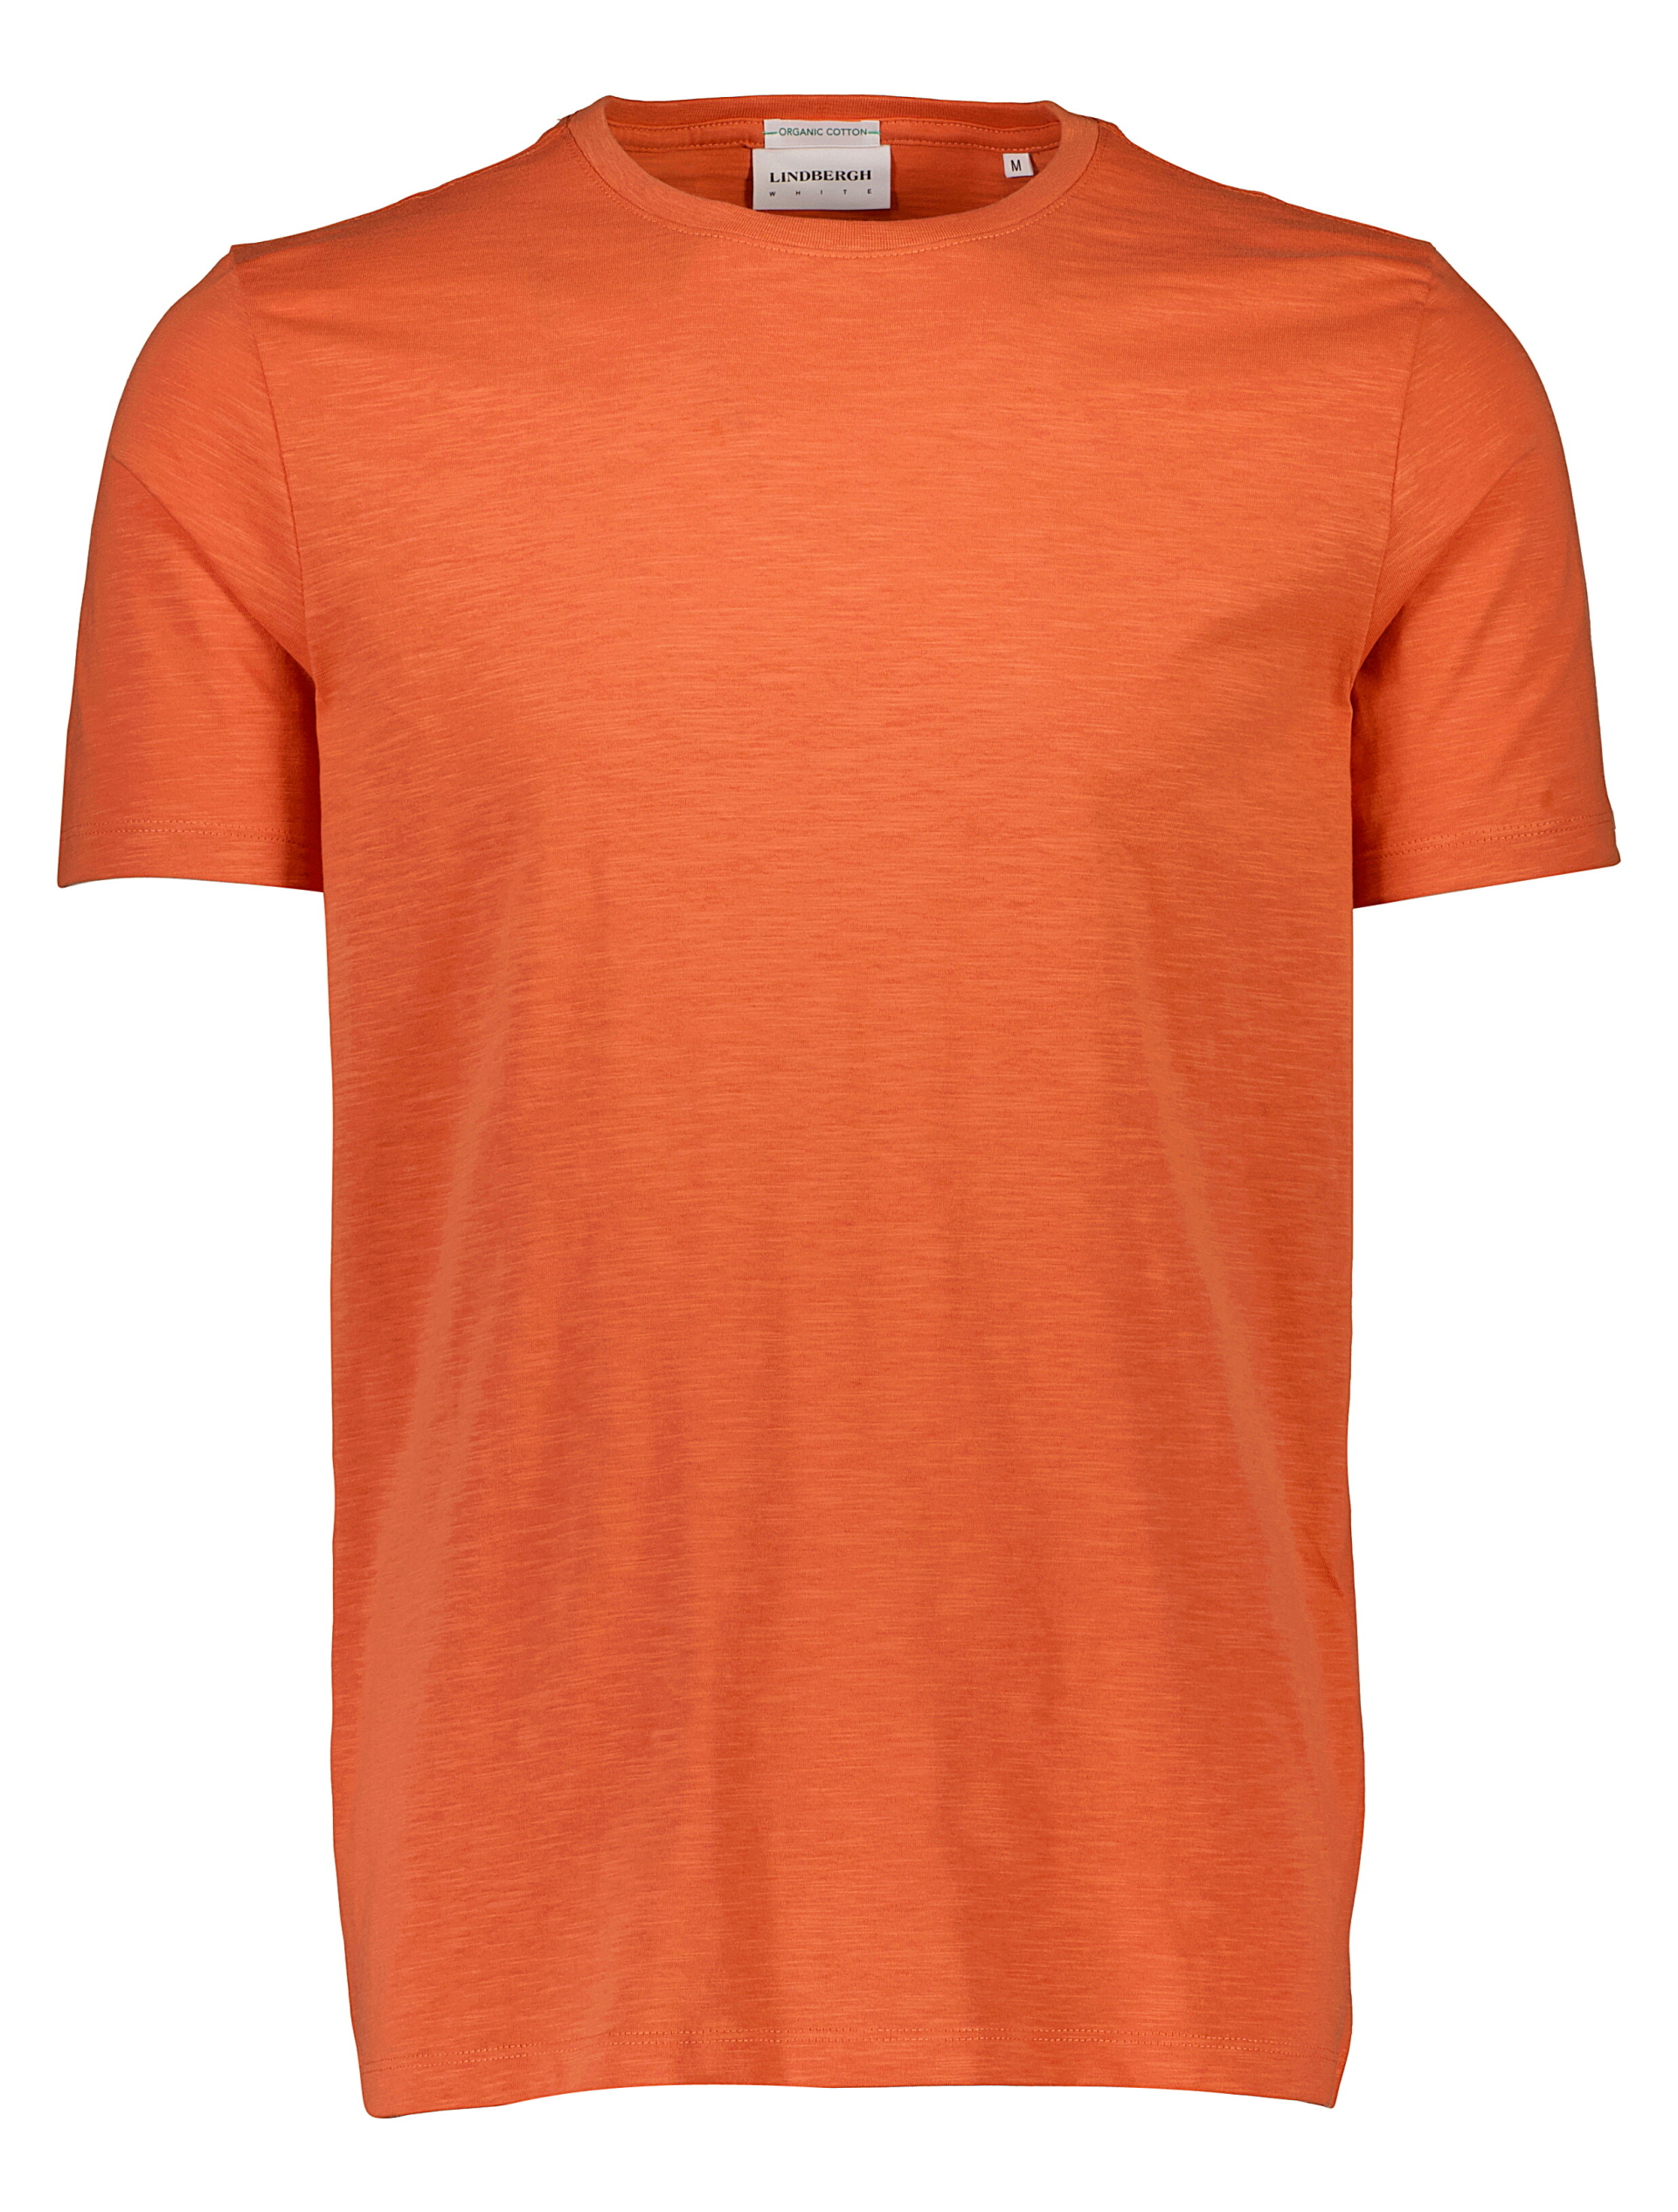 Lindbergh T-shirt orange / burnt orange